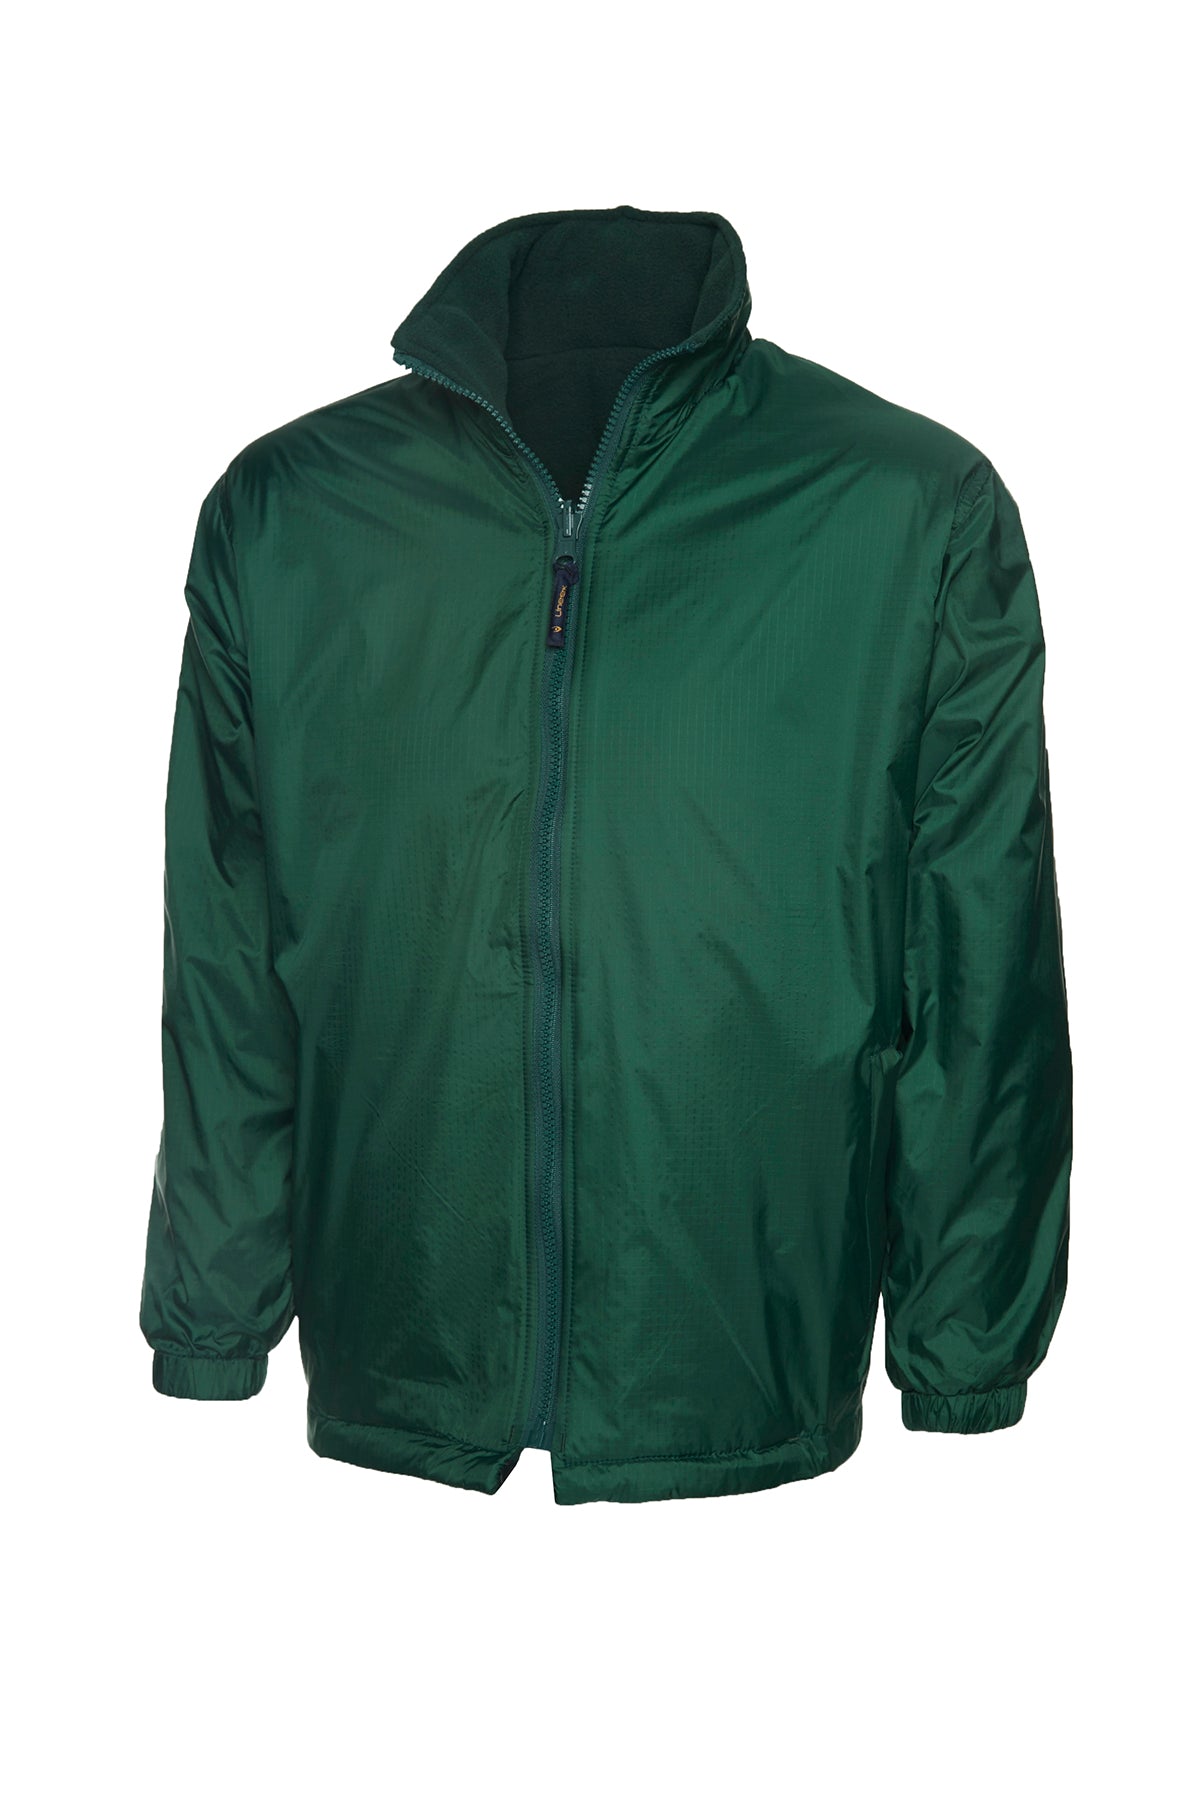 Uneek Childrens Reversible Fleece Jacket UC606 - Bottle Green